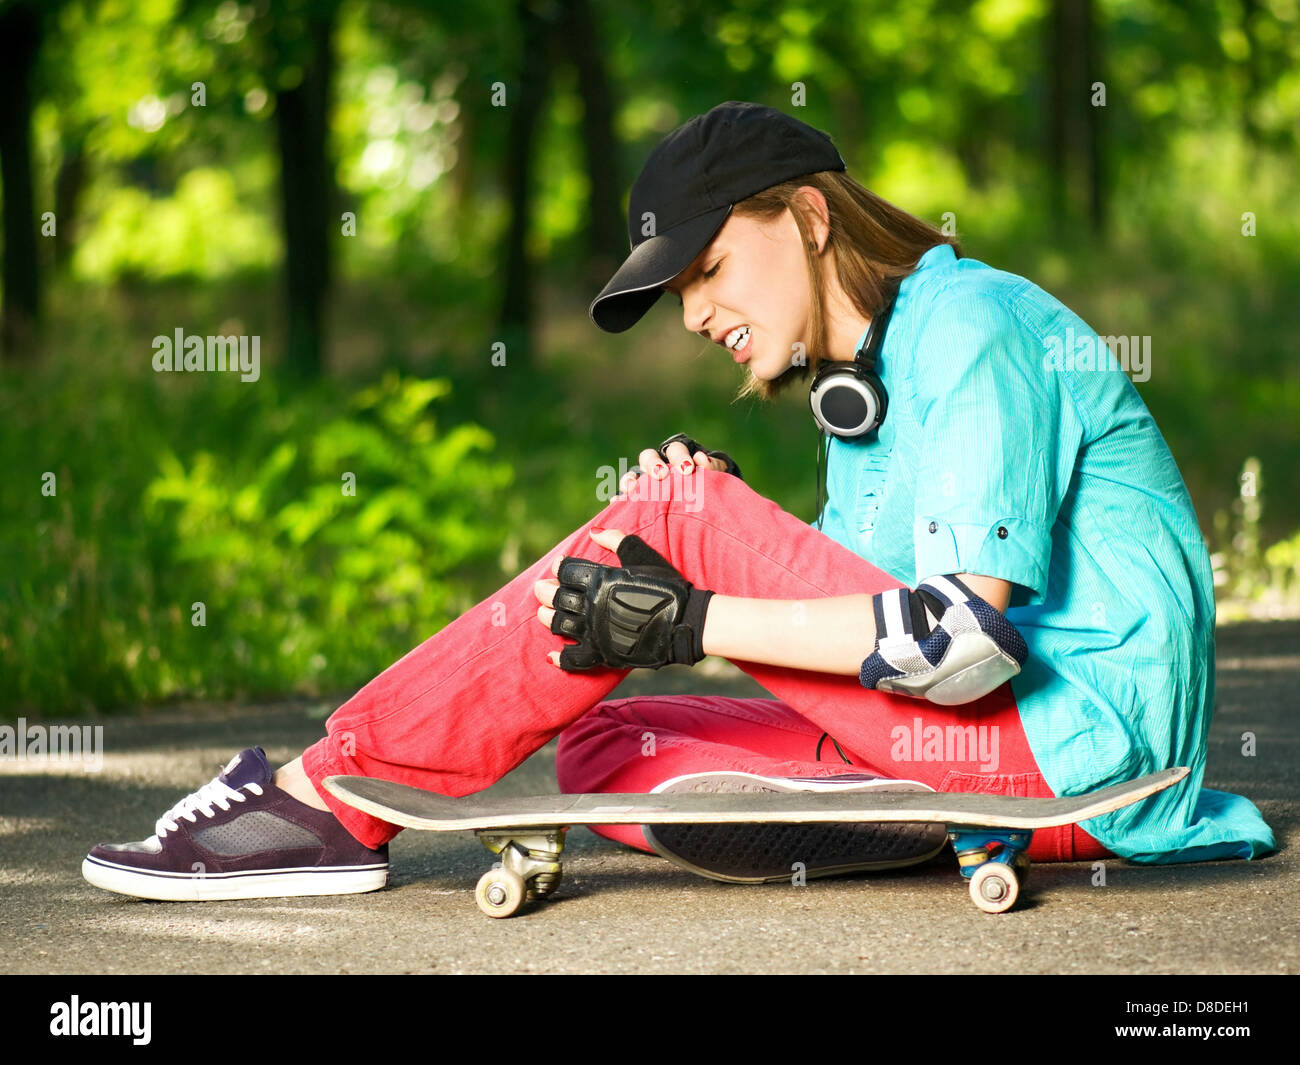 Teenage girl with skateboard Stock Photo